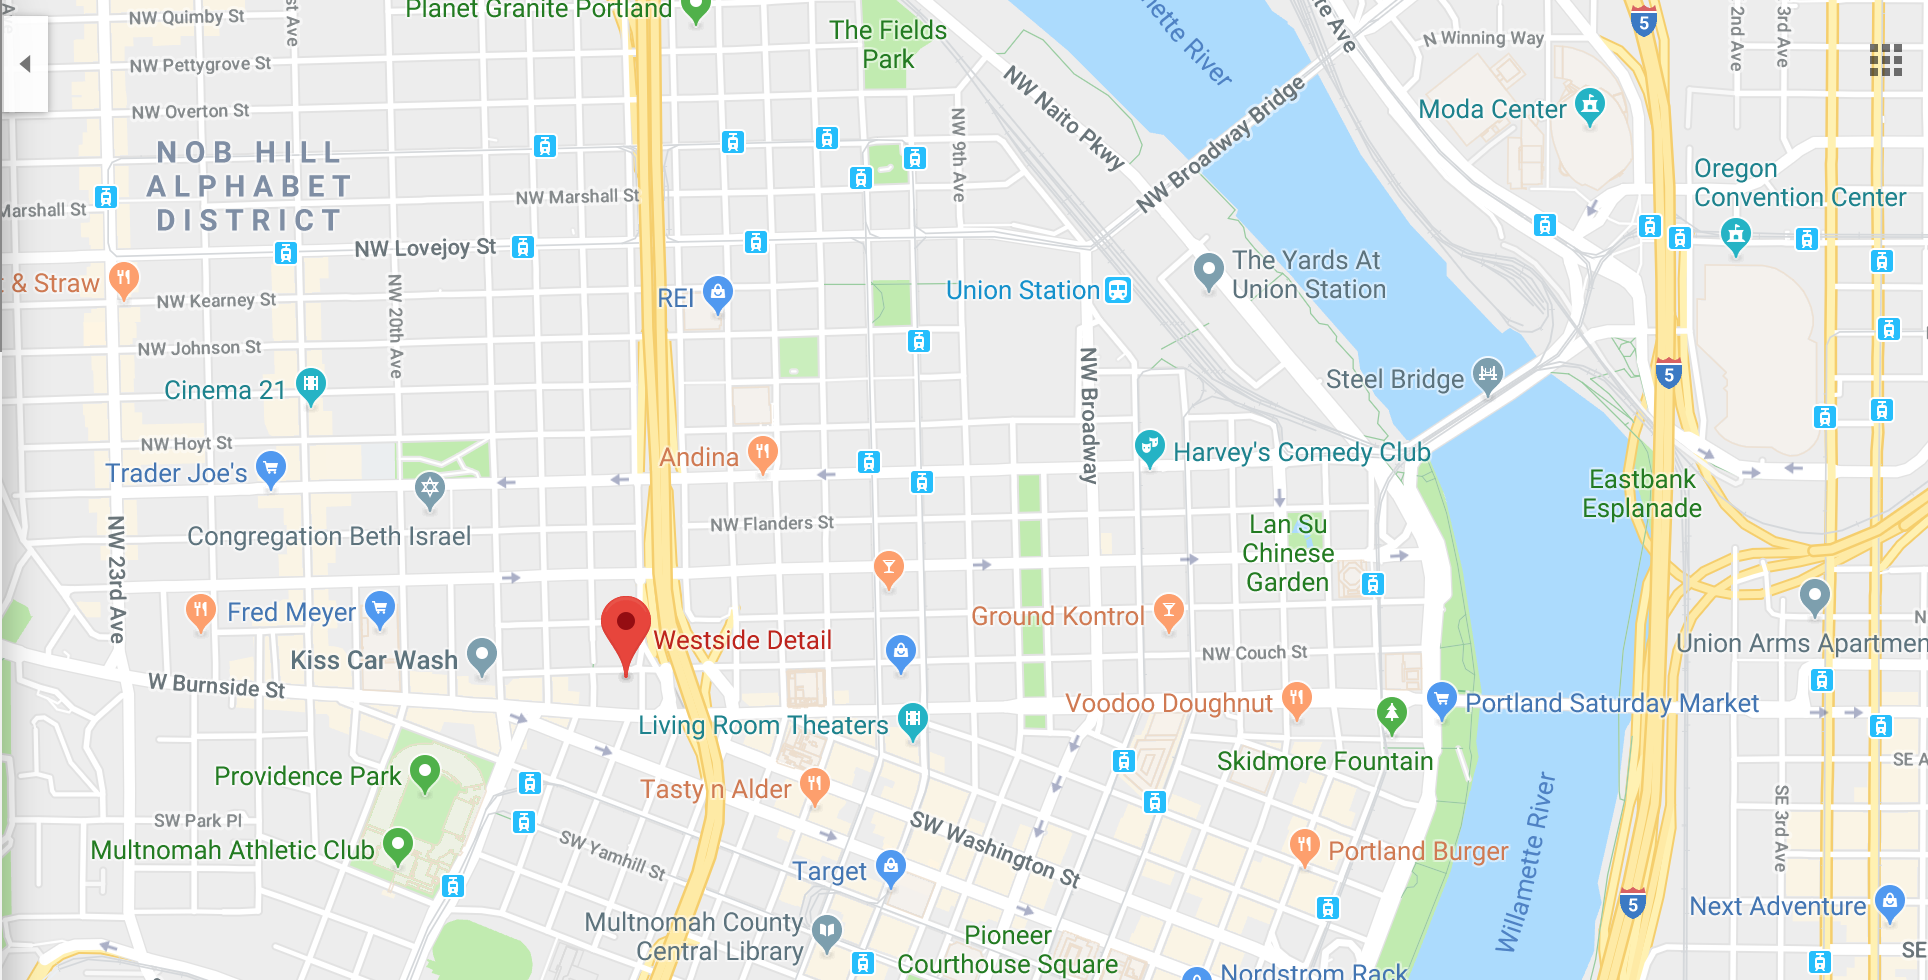 Westside Detail Location on Google Maps